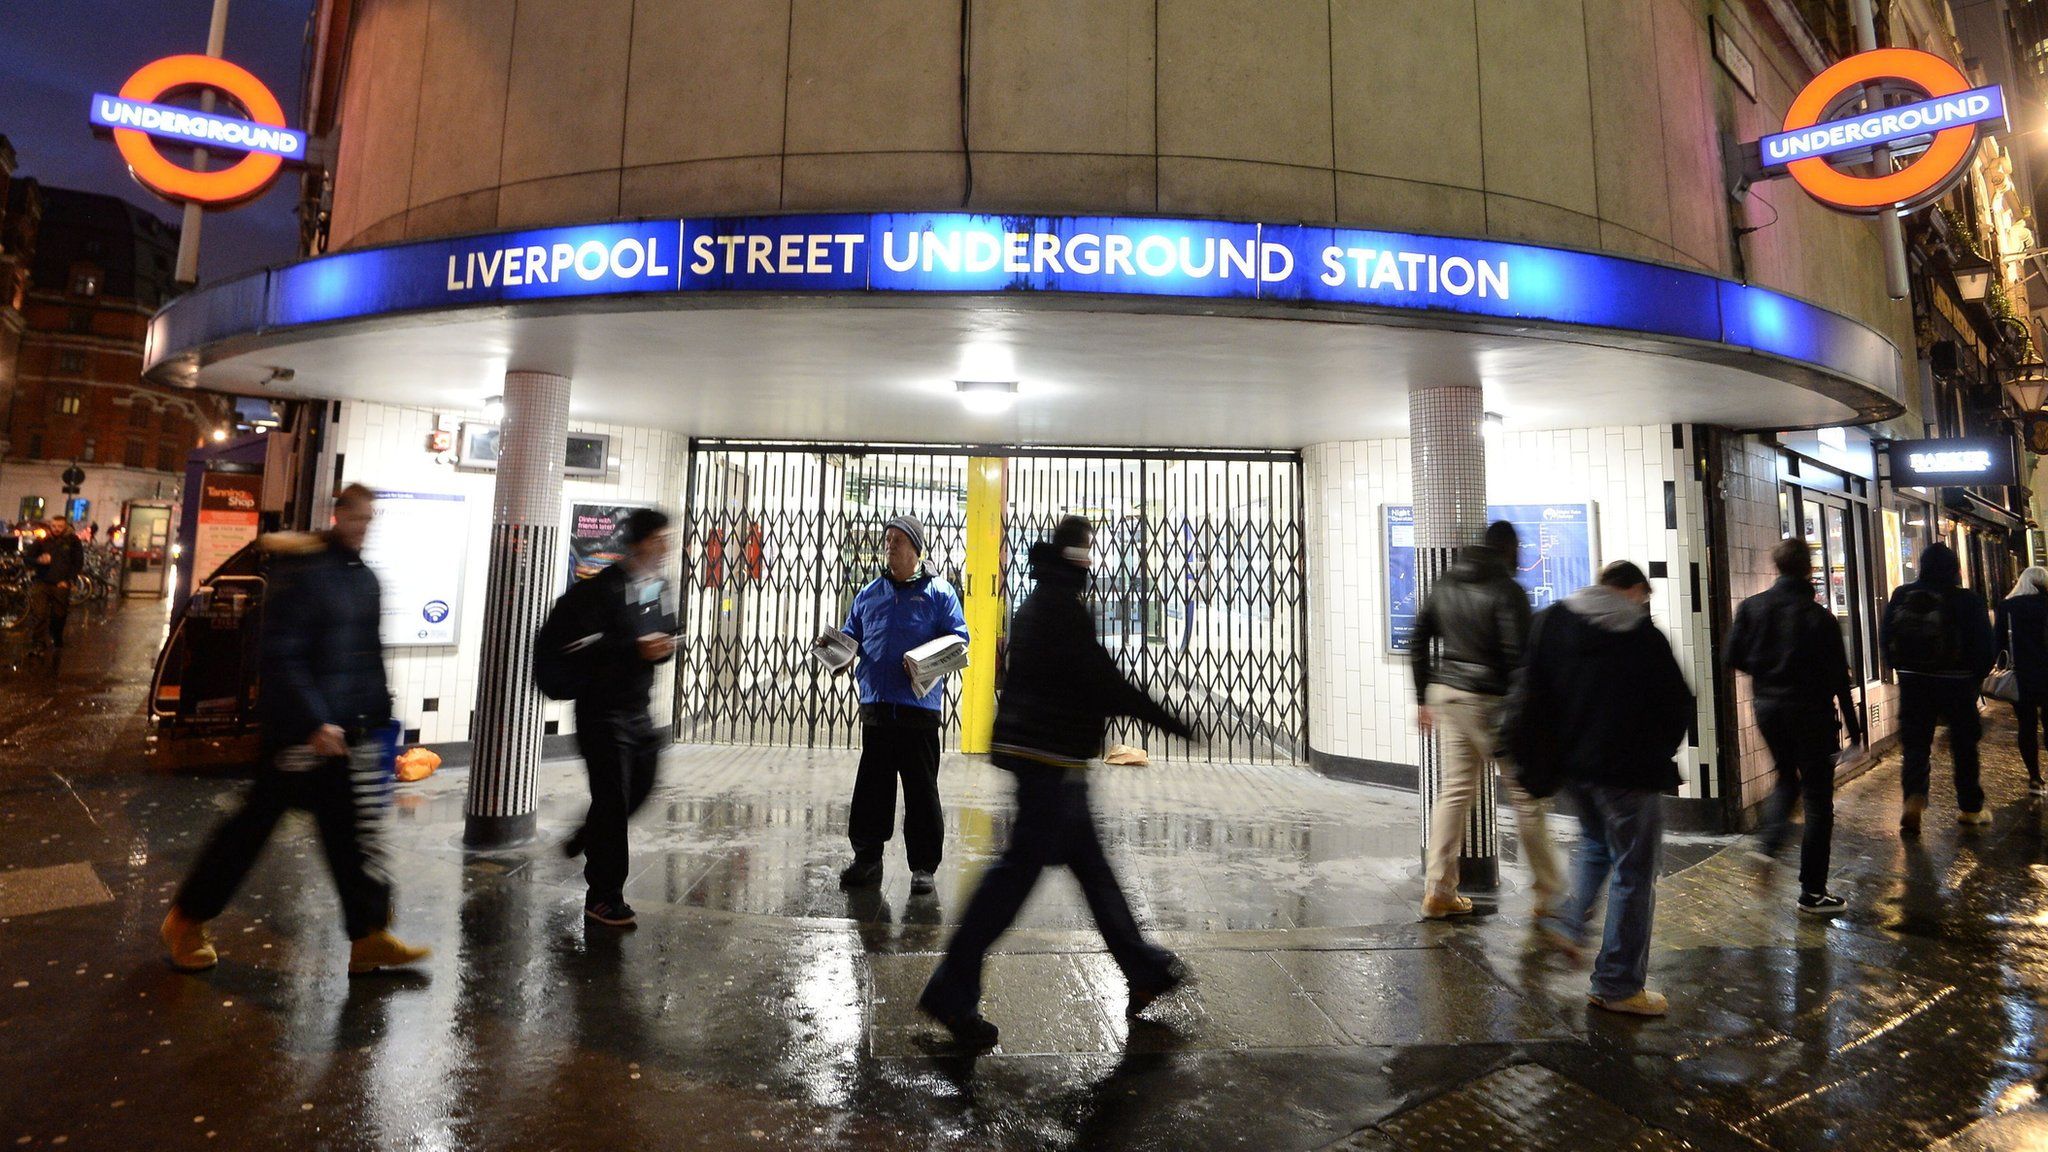 Closed gates at London's Liverpool Street Underground Station